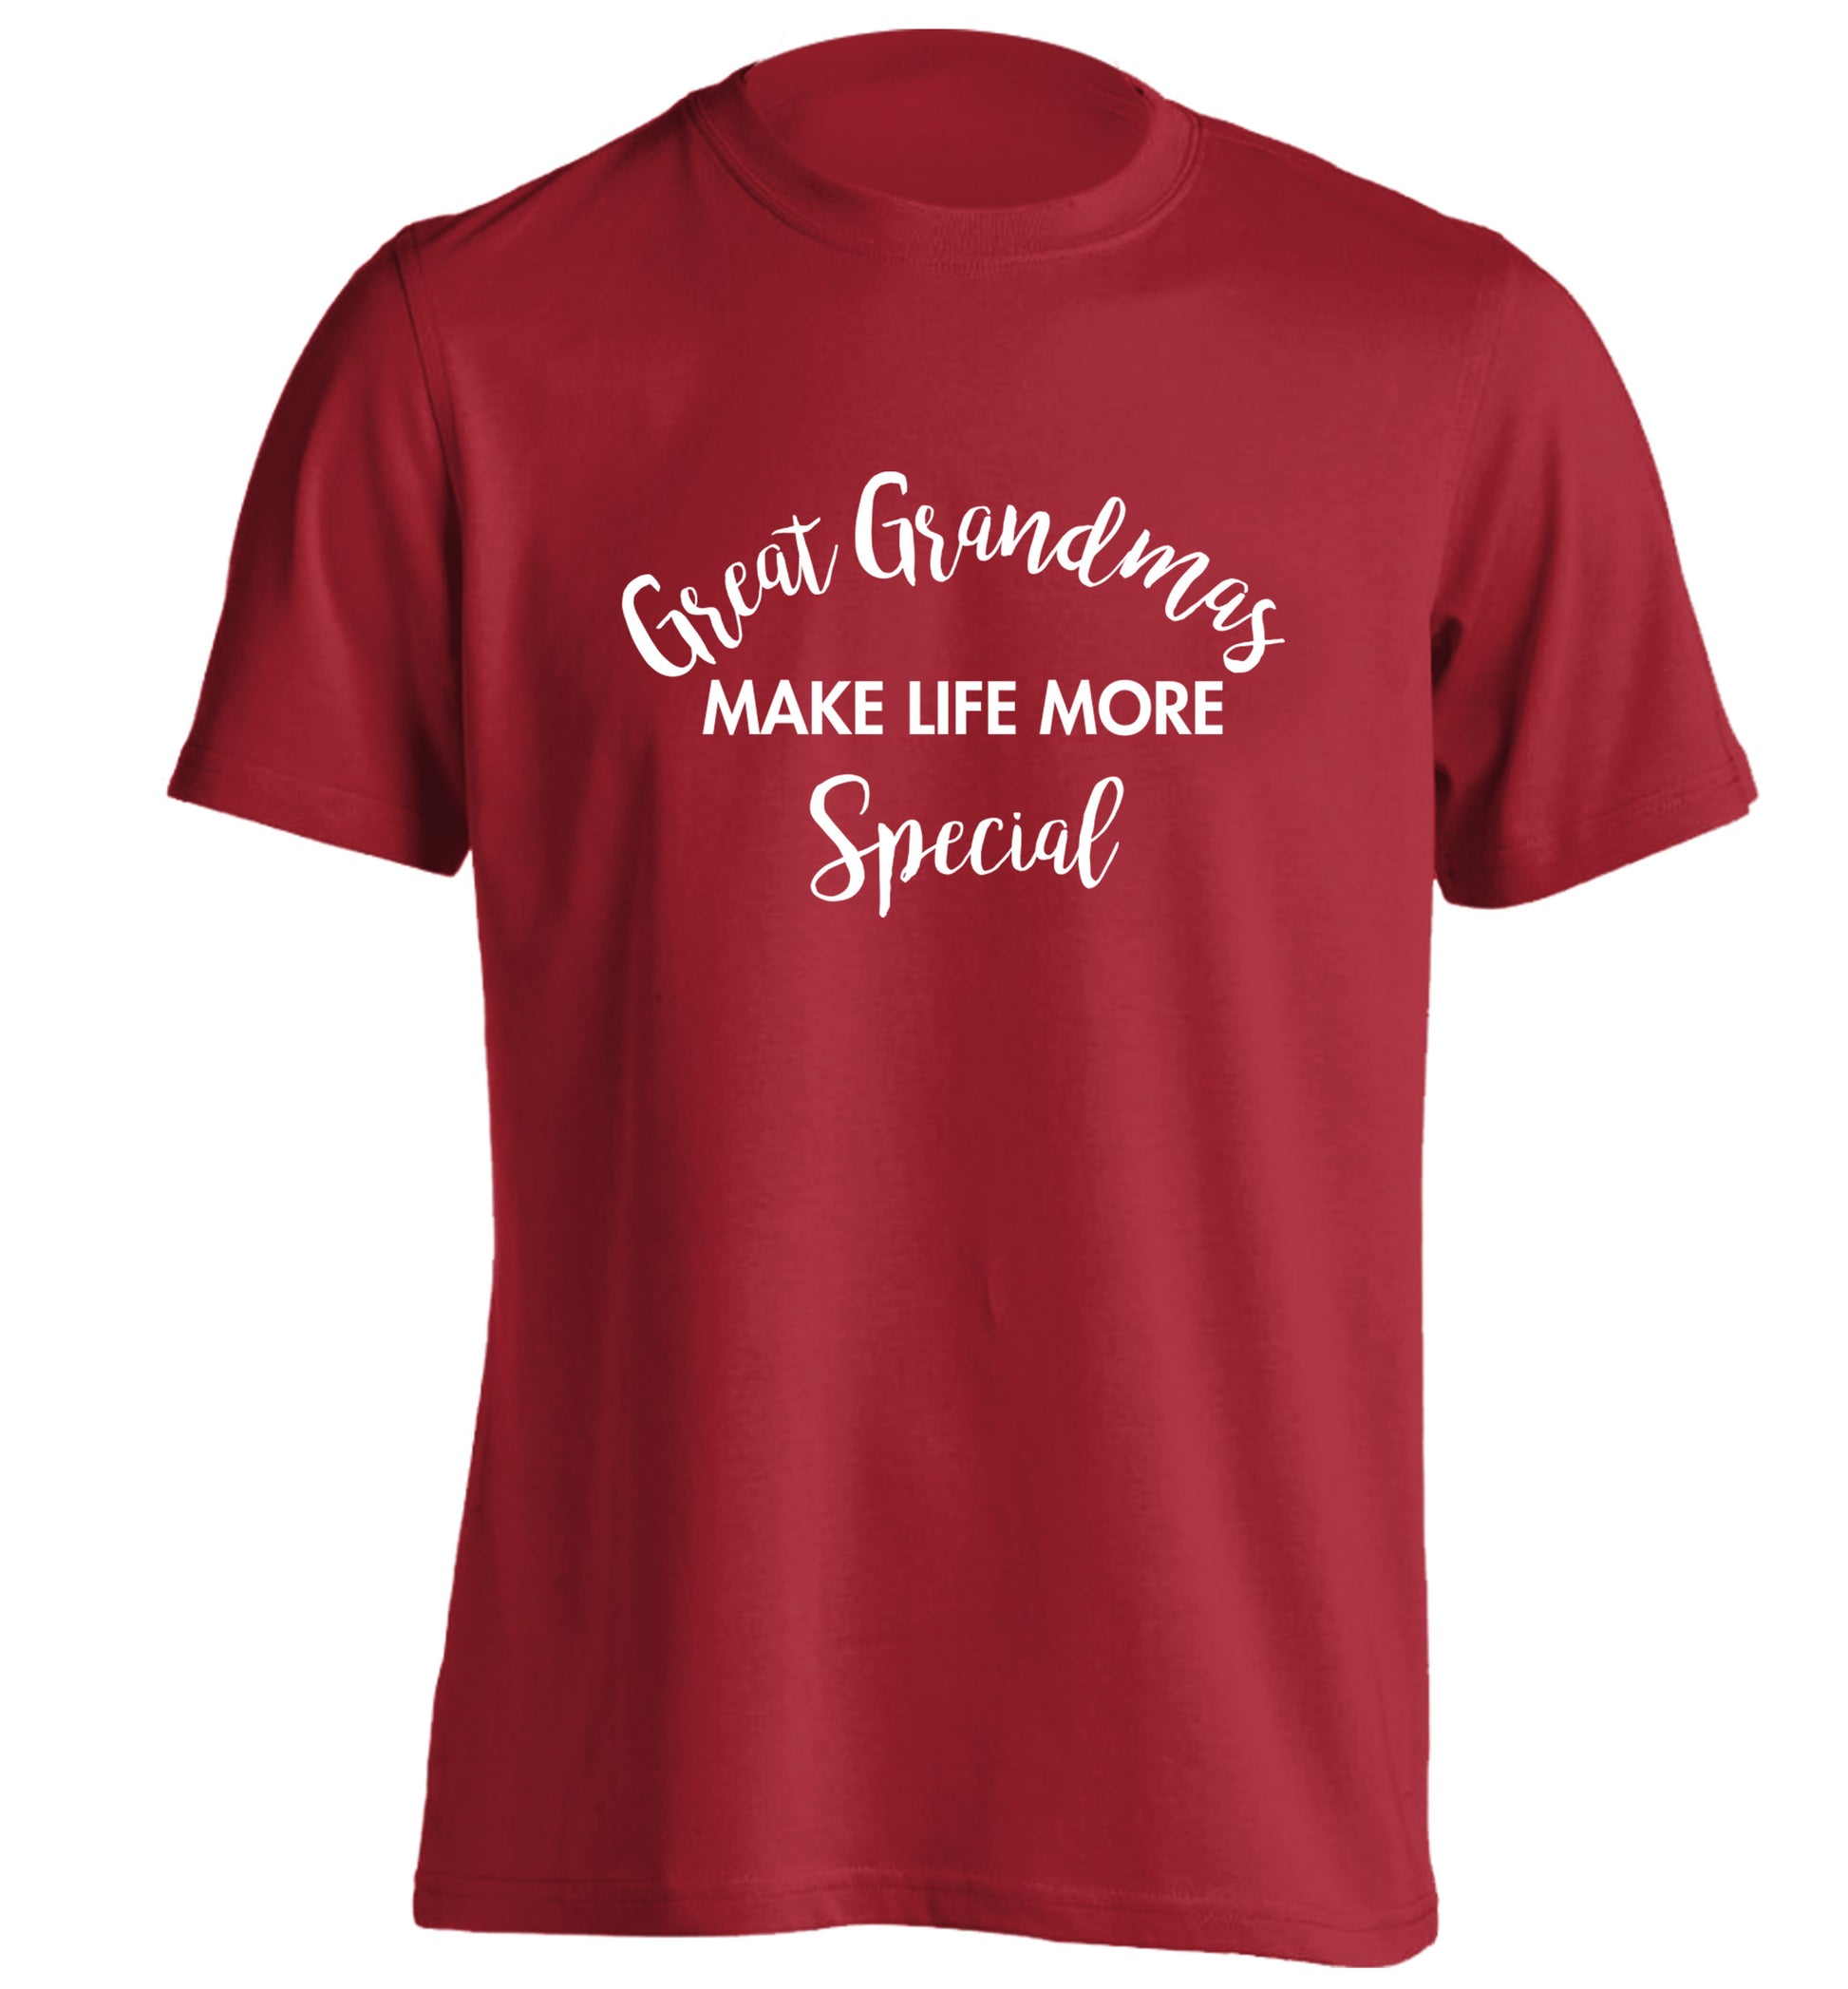 Great Grandmas make life more special adults unisex red Tshirt 2XL